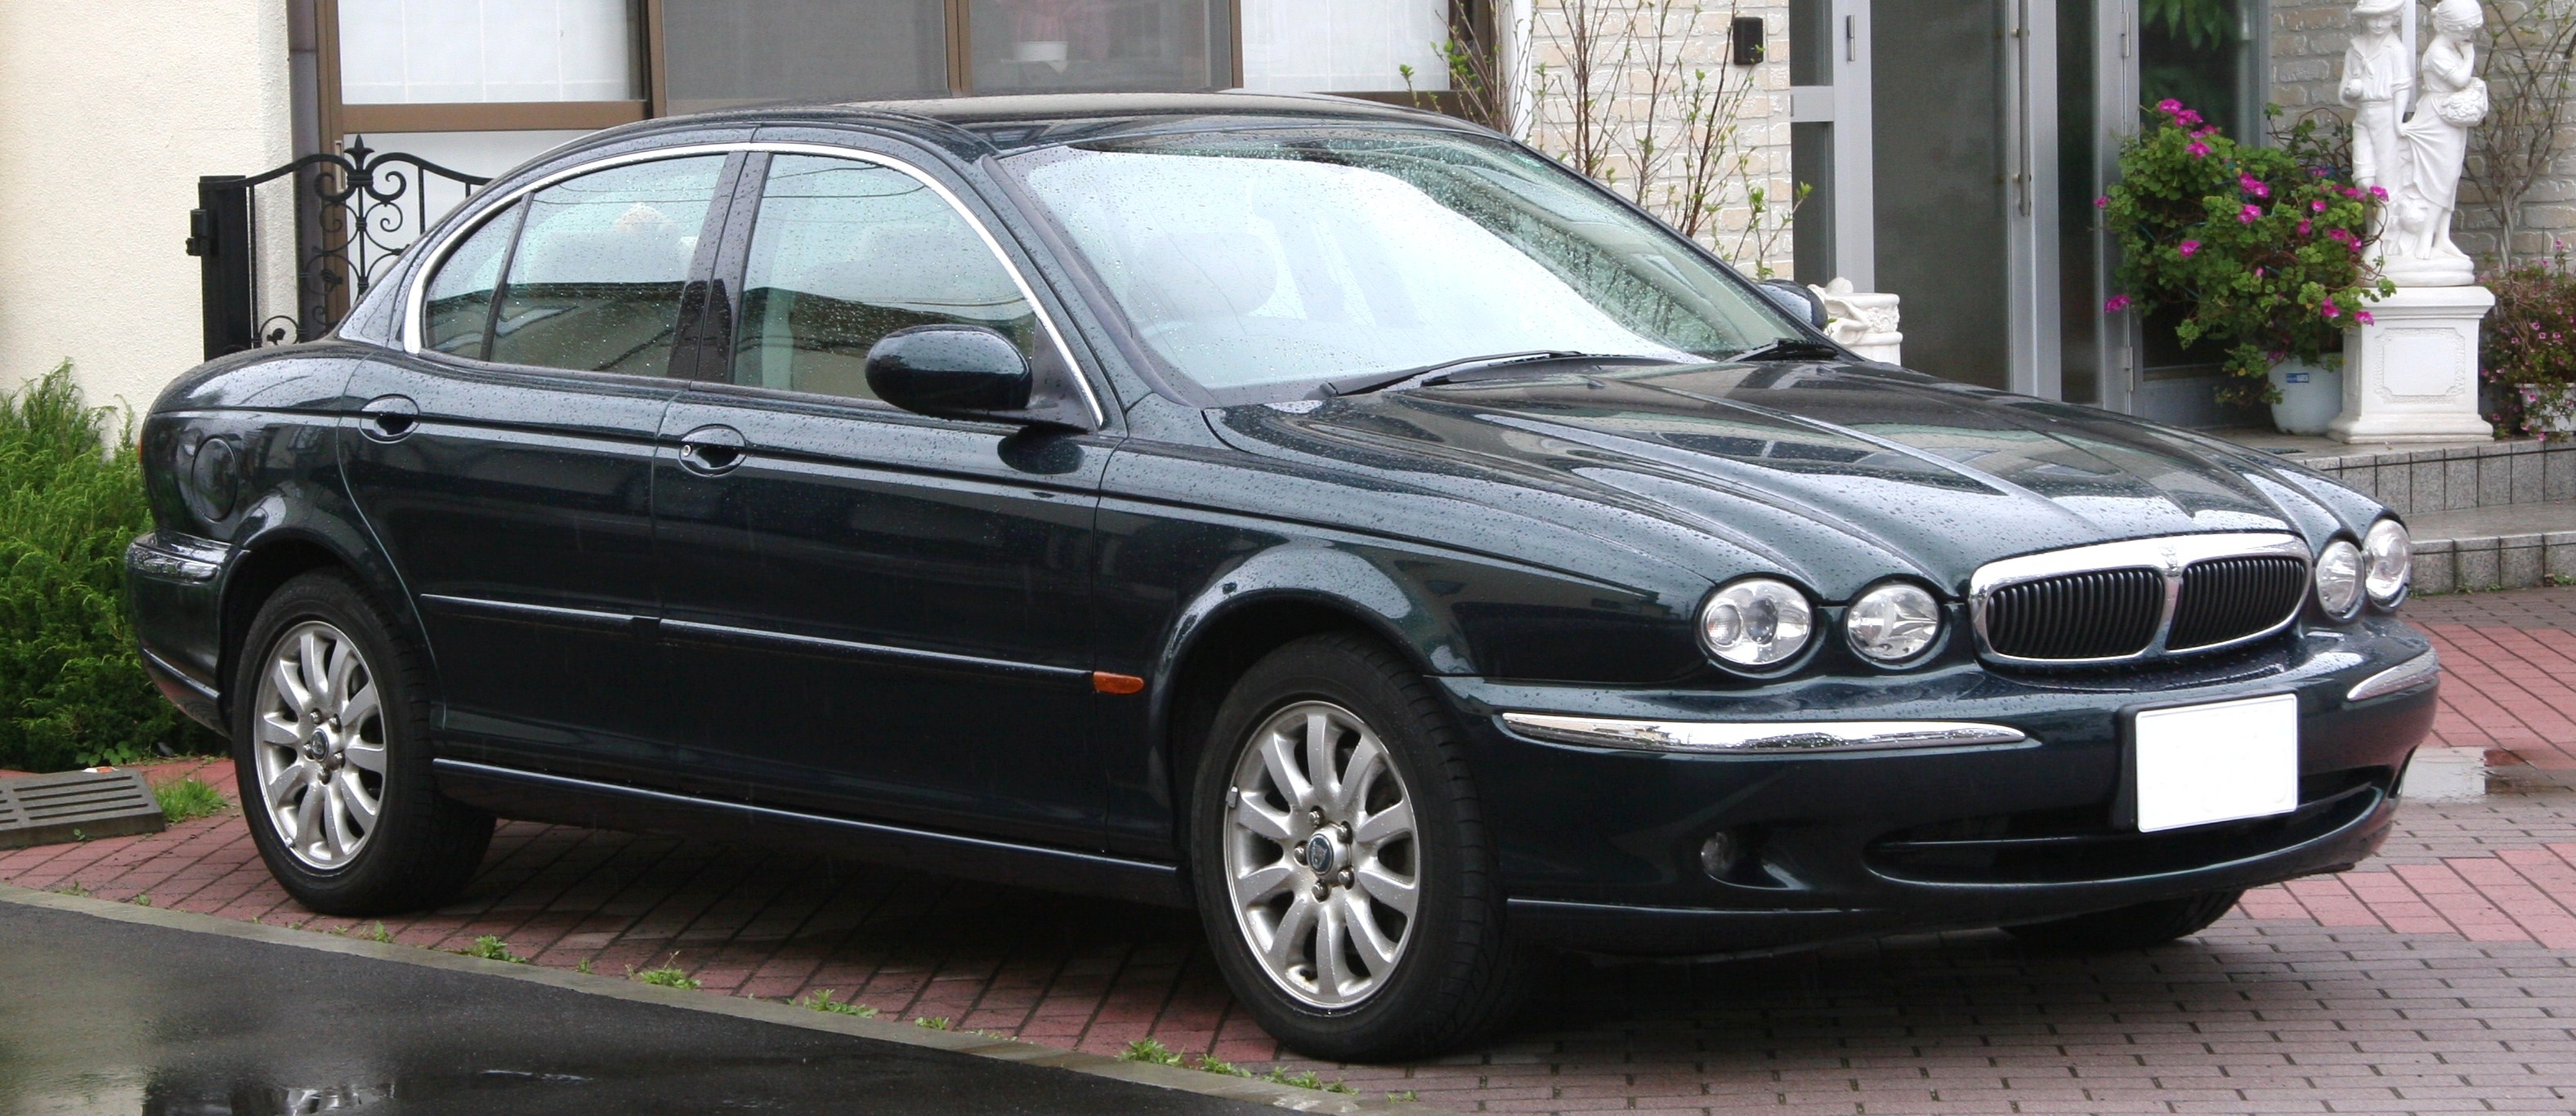 Jaguar X-type 2010 photo - 2